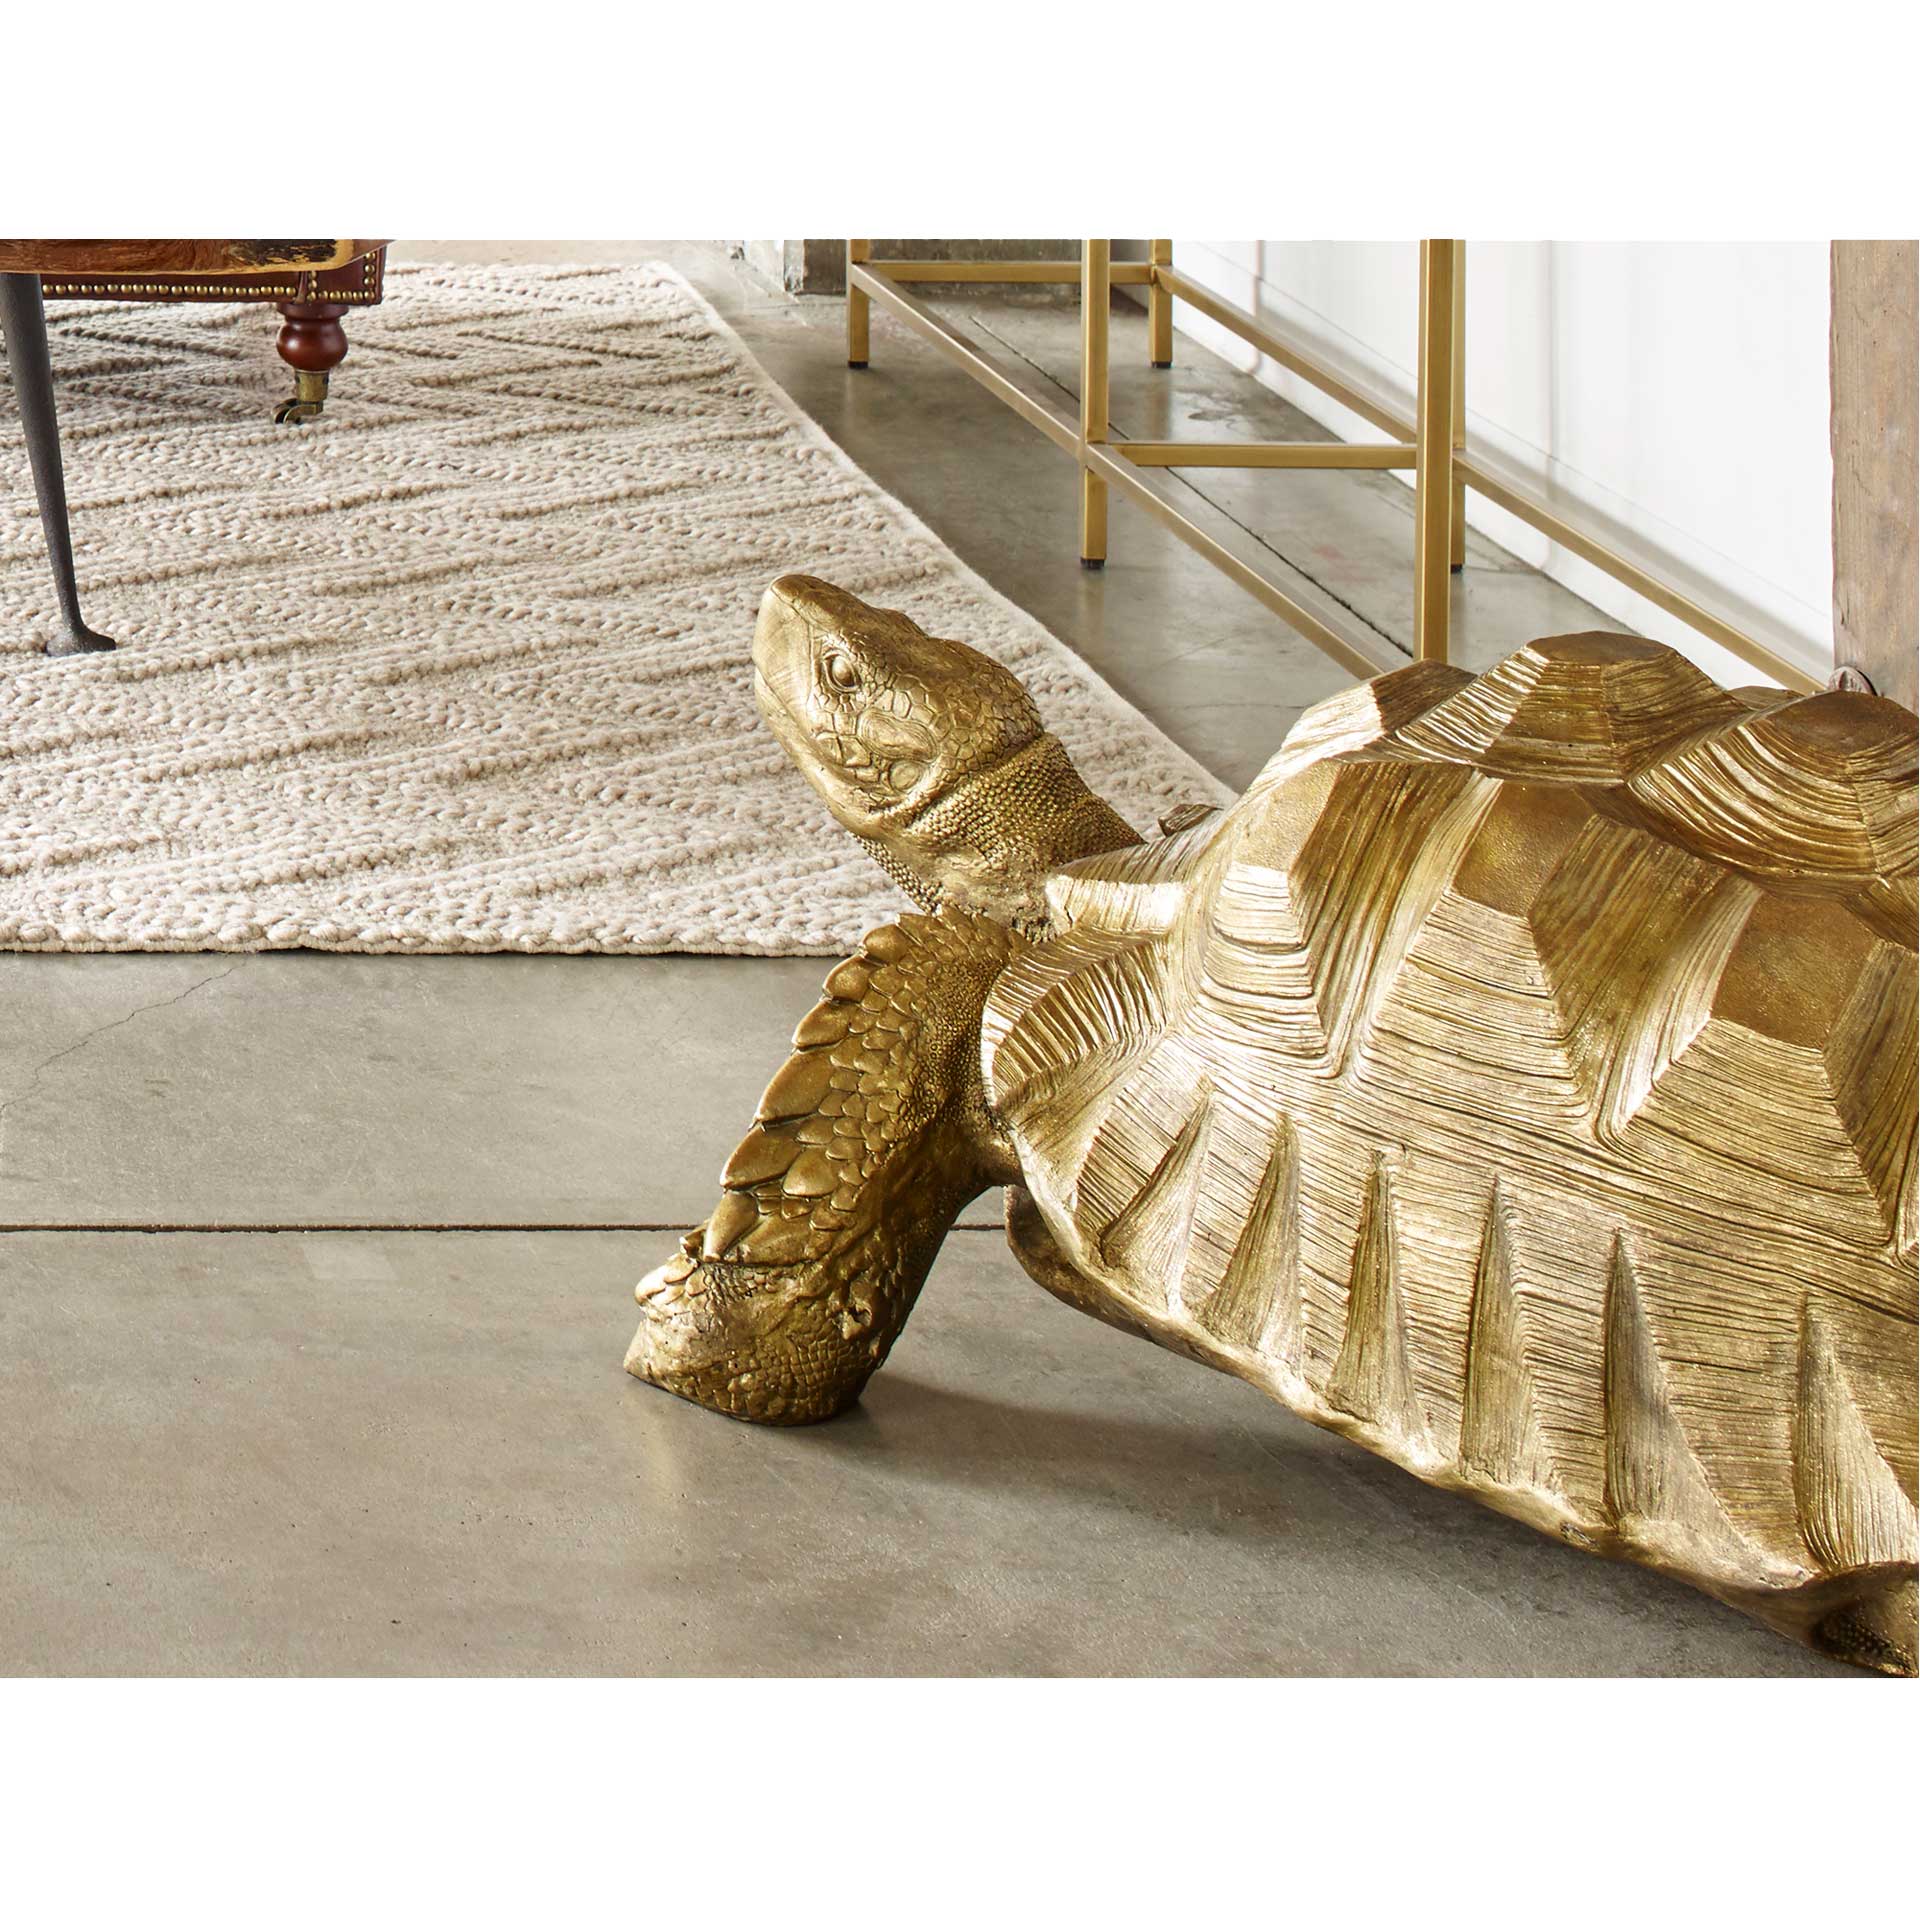 Morla Turtle Sculpture